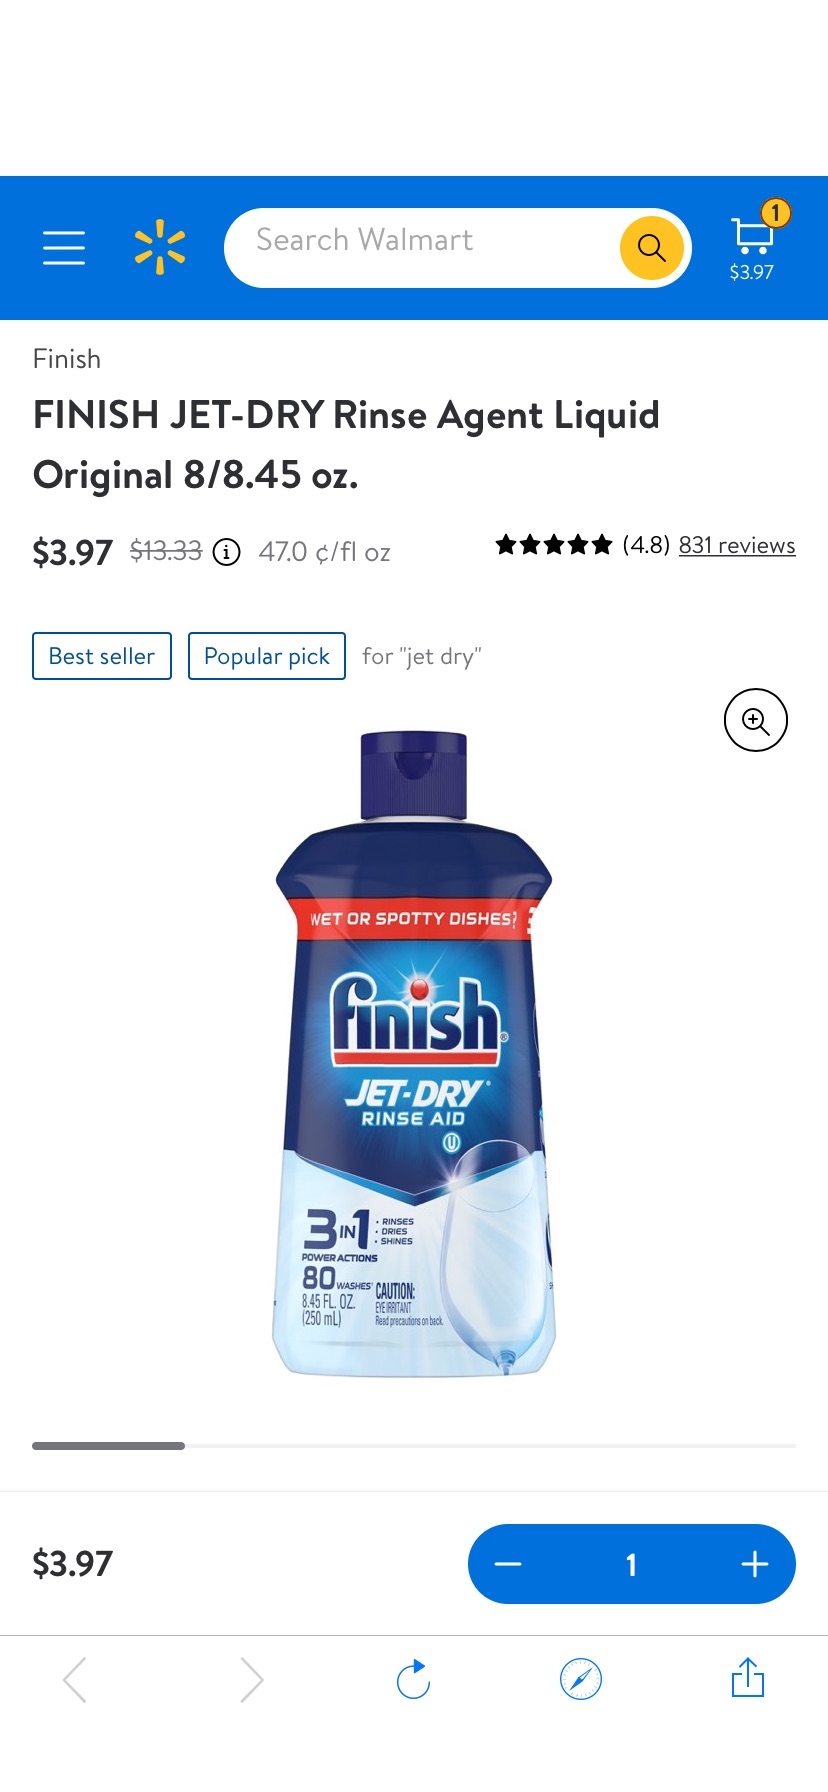 FINISH JET-DRY Rinse Agent Liquid Original 8/8.45 oz. - Walmart.com洗涤剂